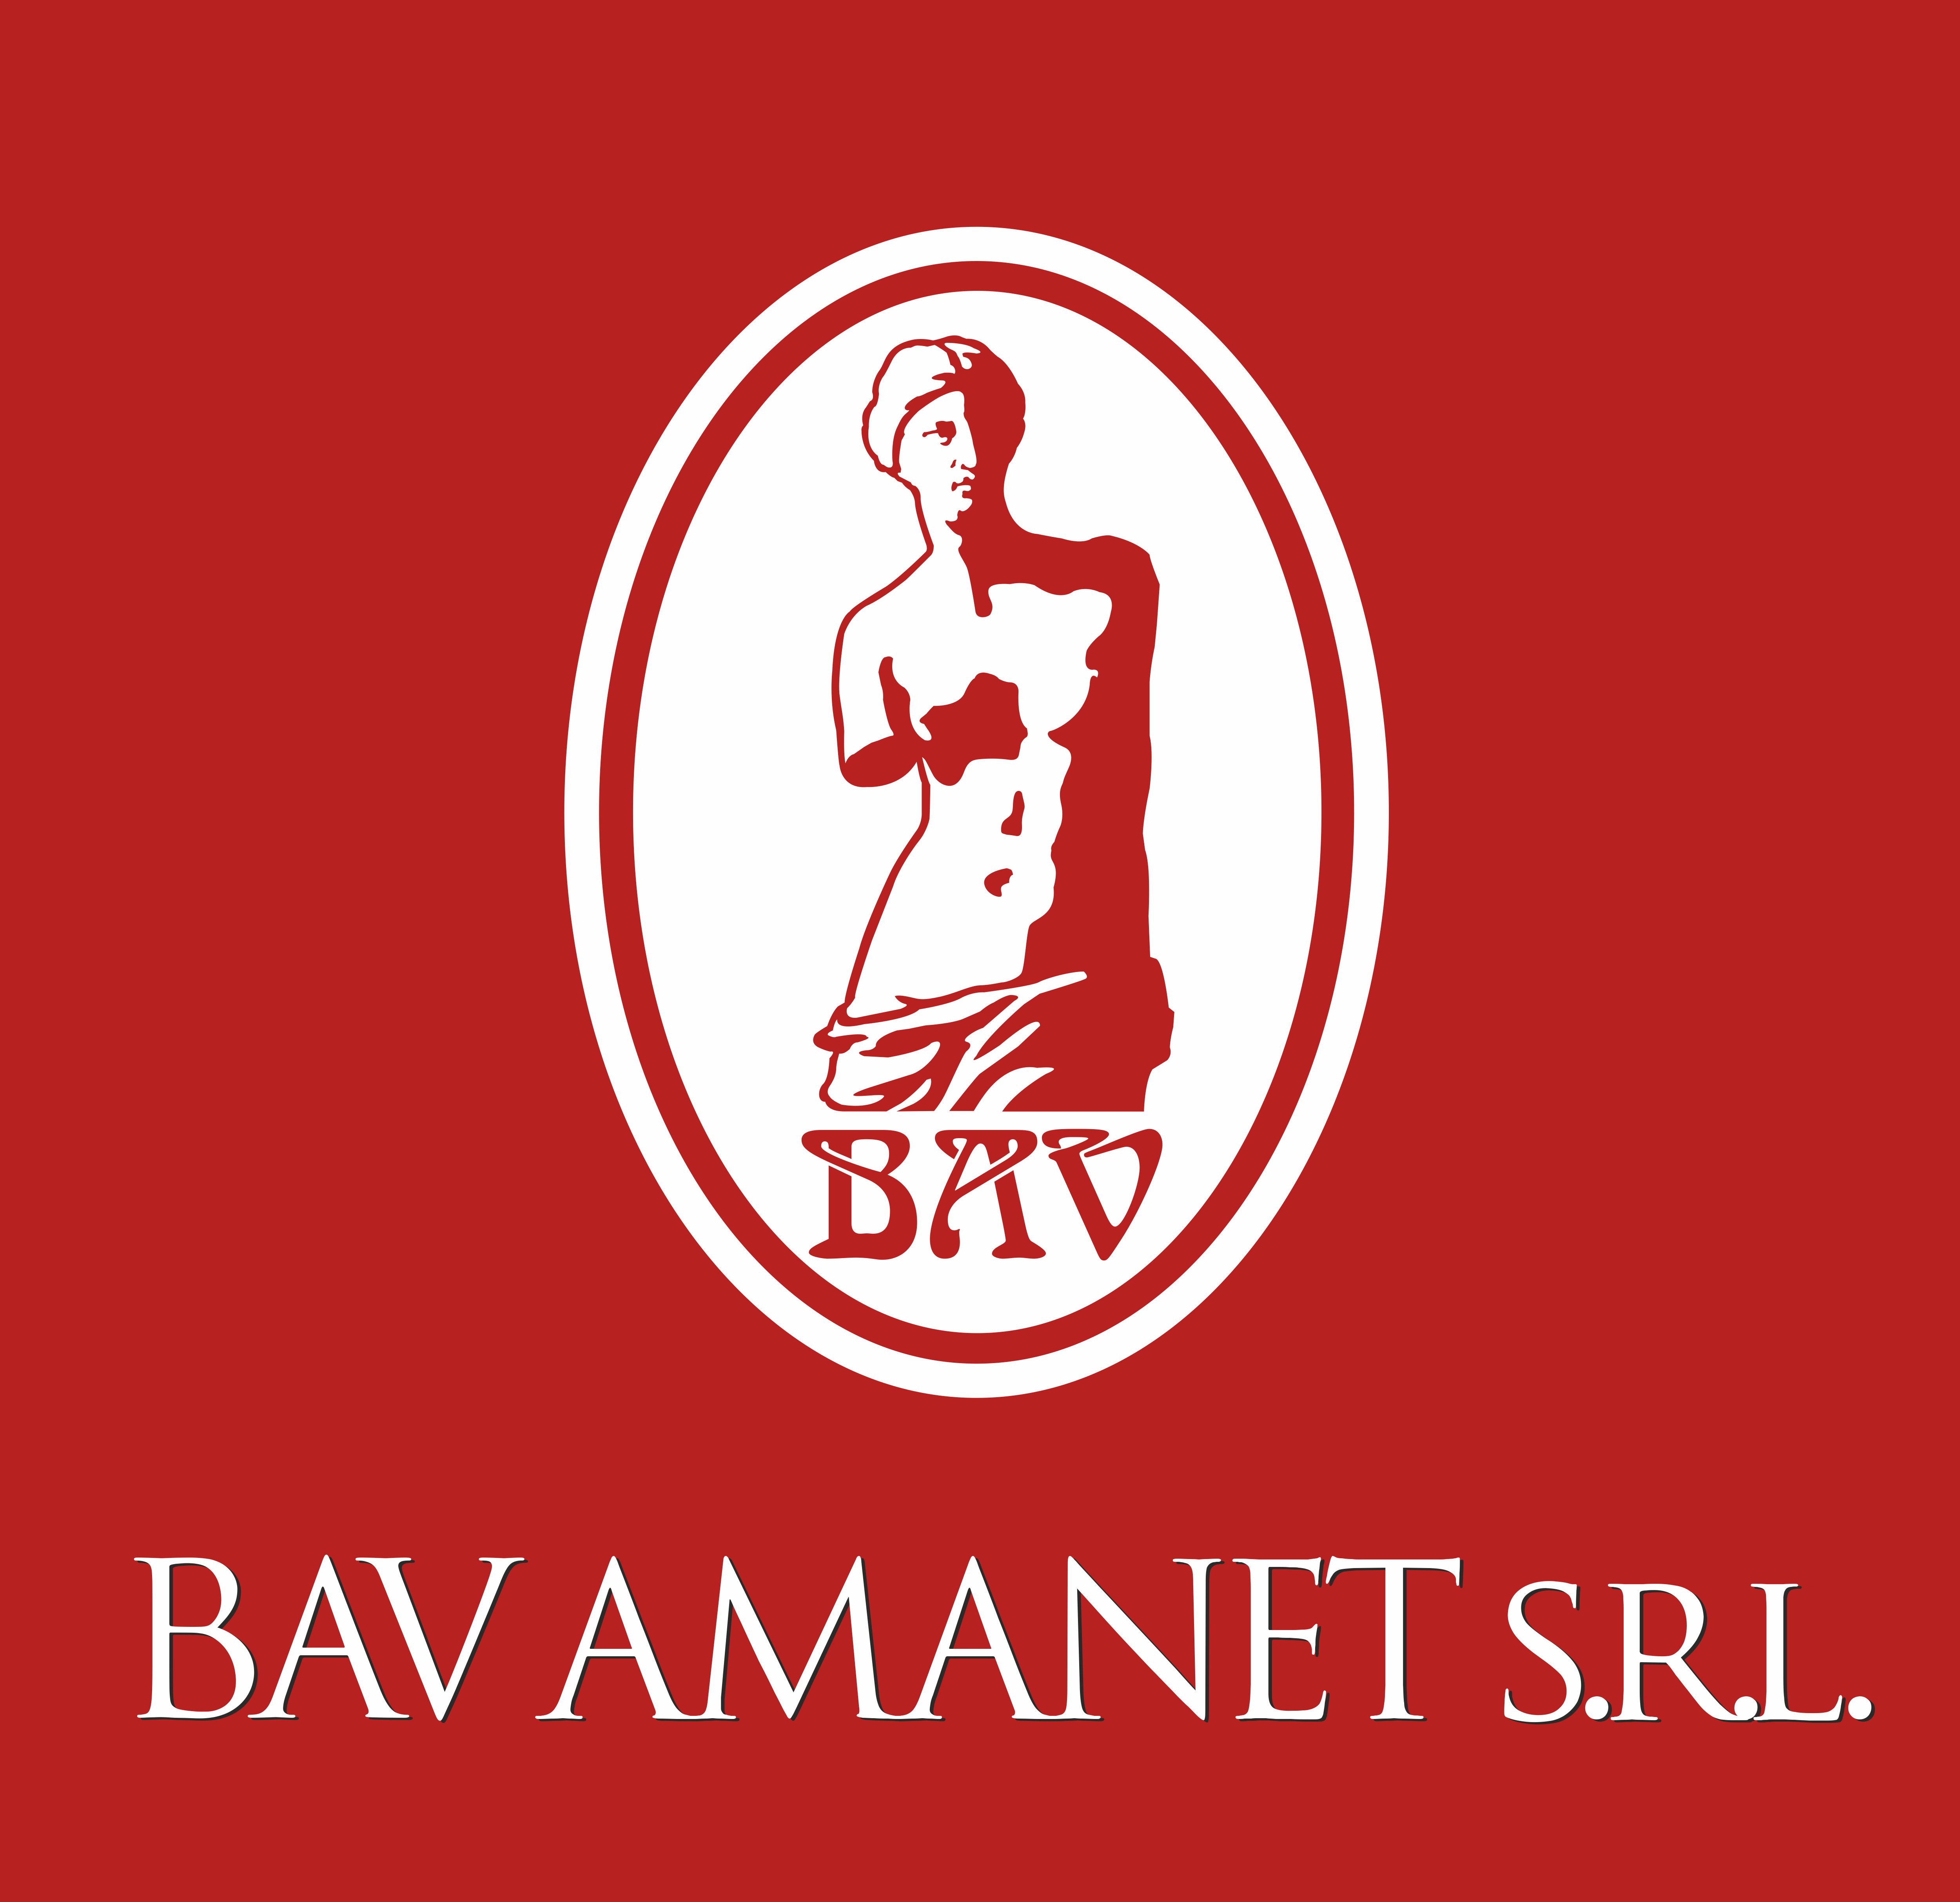 BAV Amanet srl logo